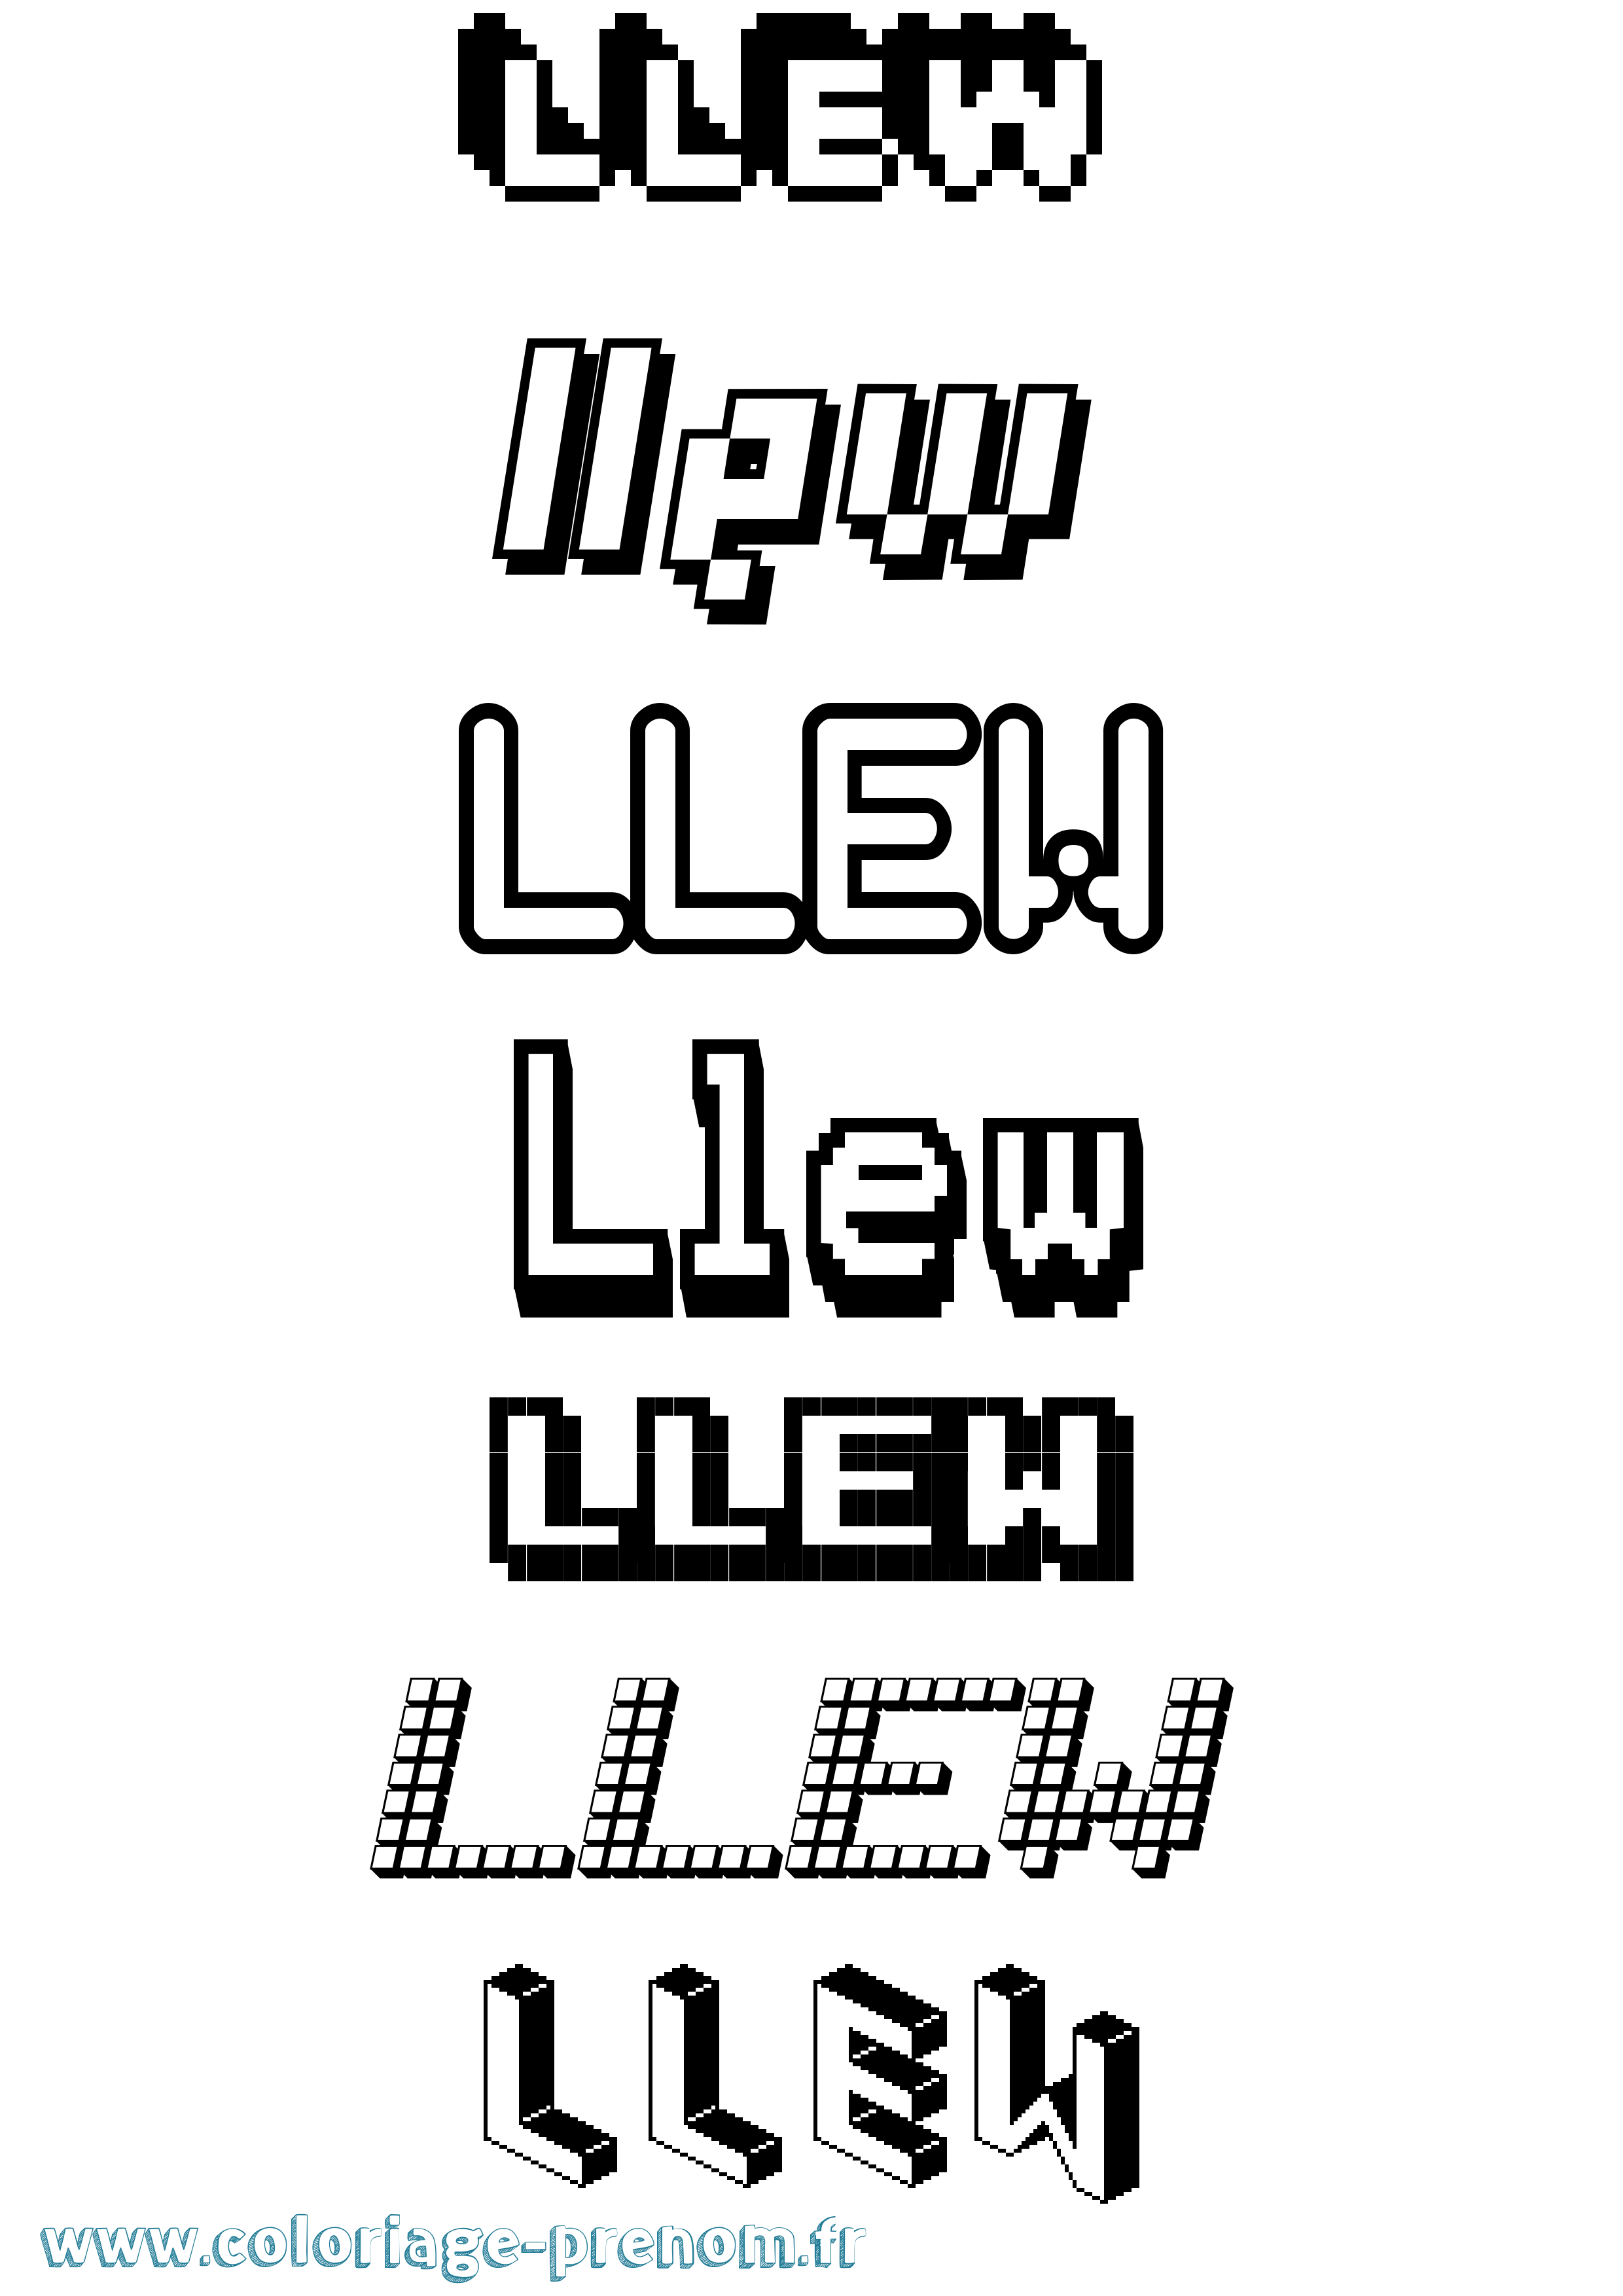 Coloriage prénom Llew Pixel